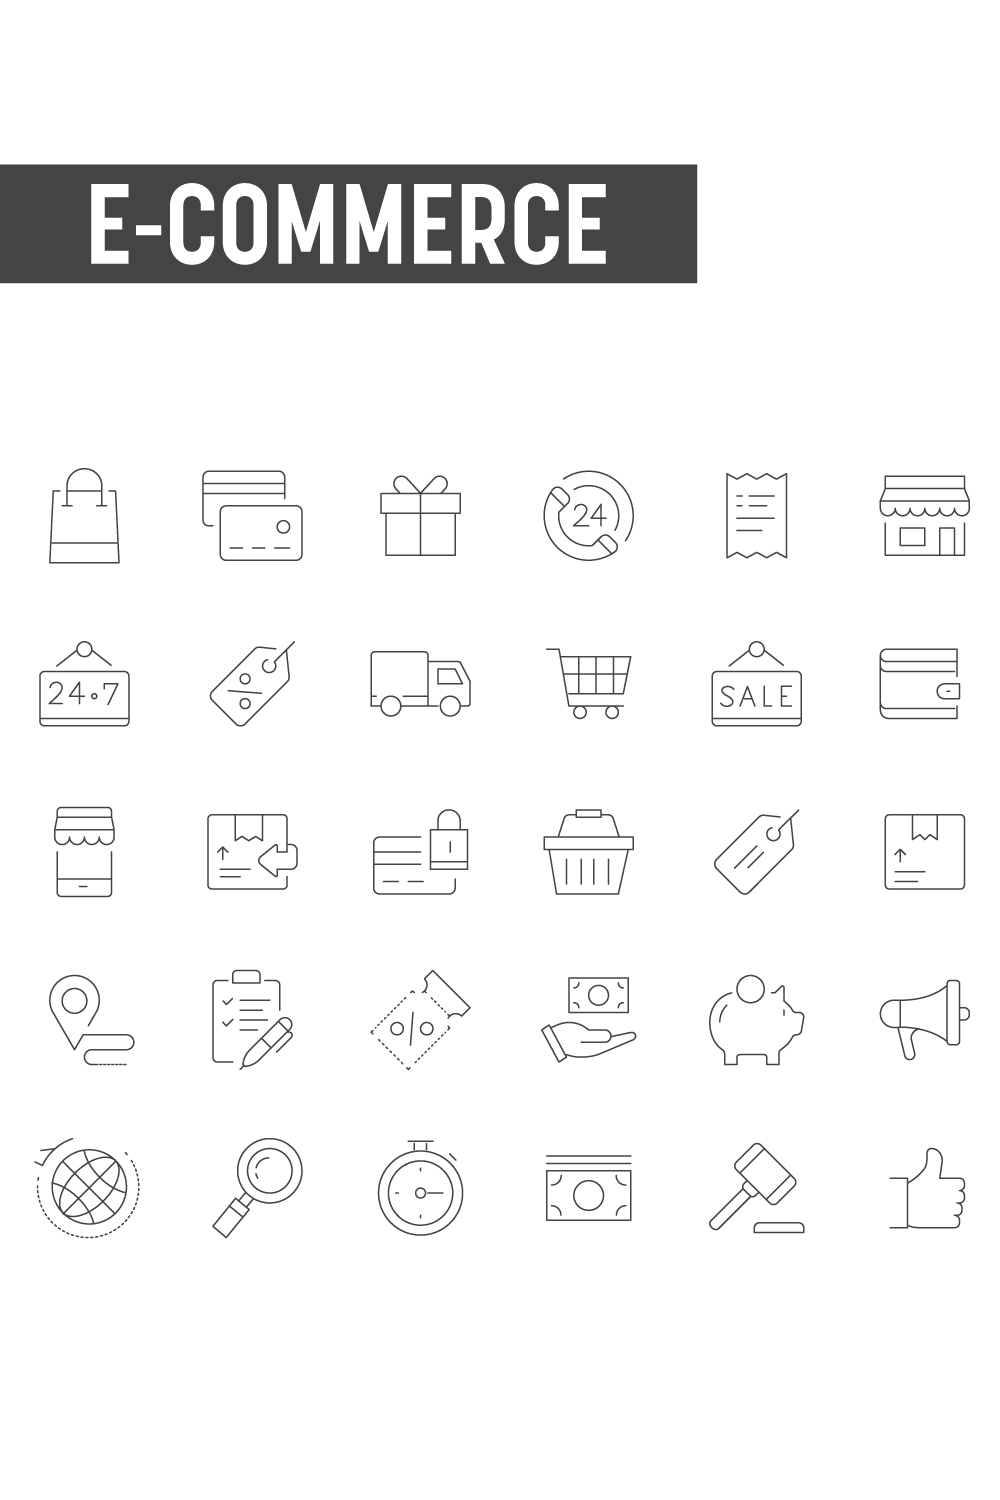 50+ E-commerce Icon, Ai, EPS, SVG, JPEG, E-commerce Icons pinterest preview image.